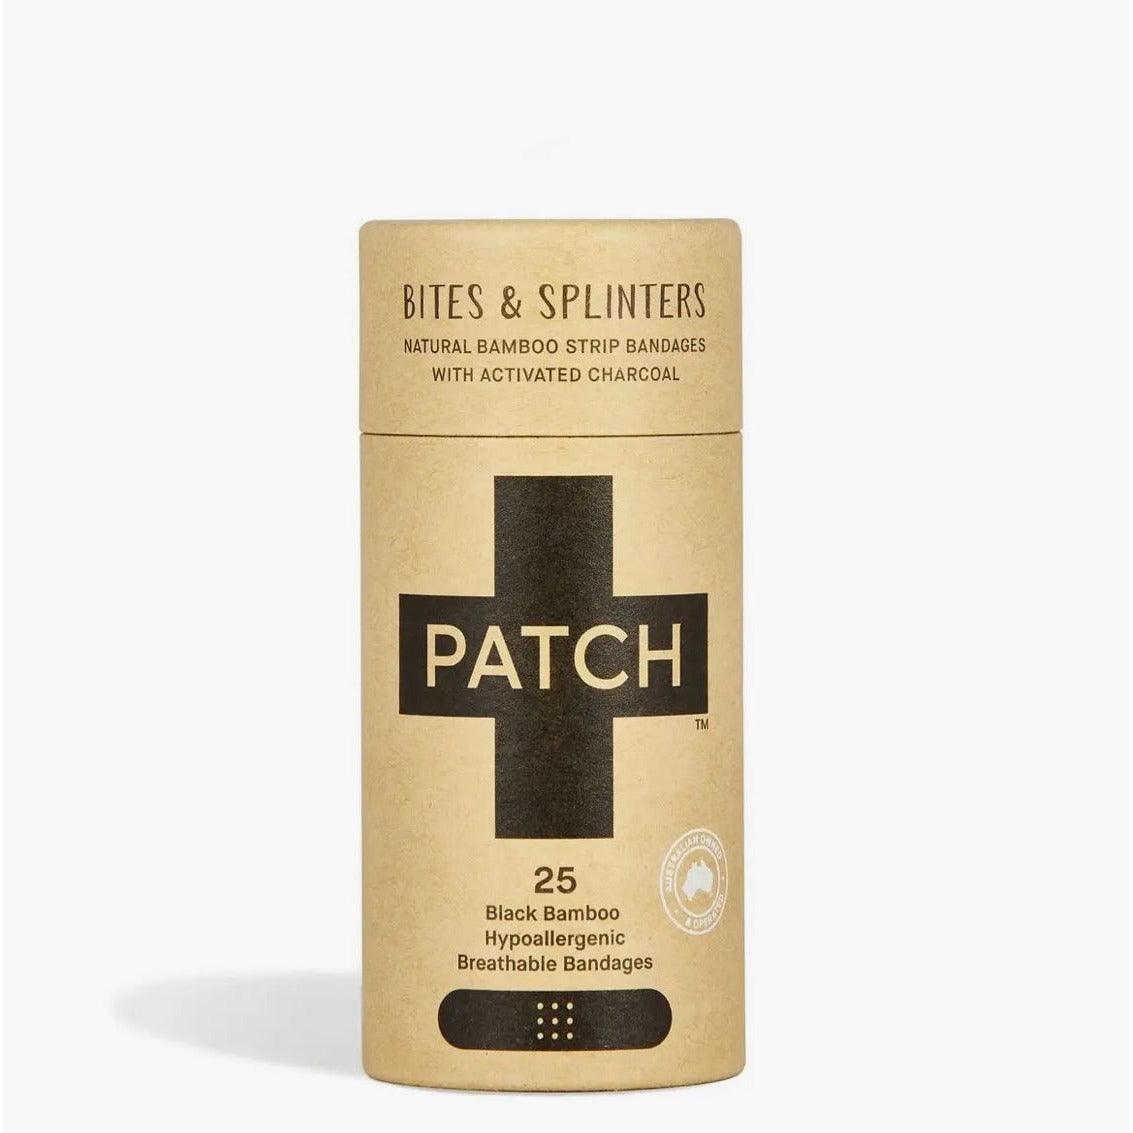 PATCH Charcoal Bandages - Scrapes, Bites, Stings - Ninth & Pine